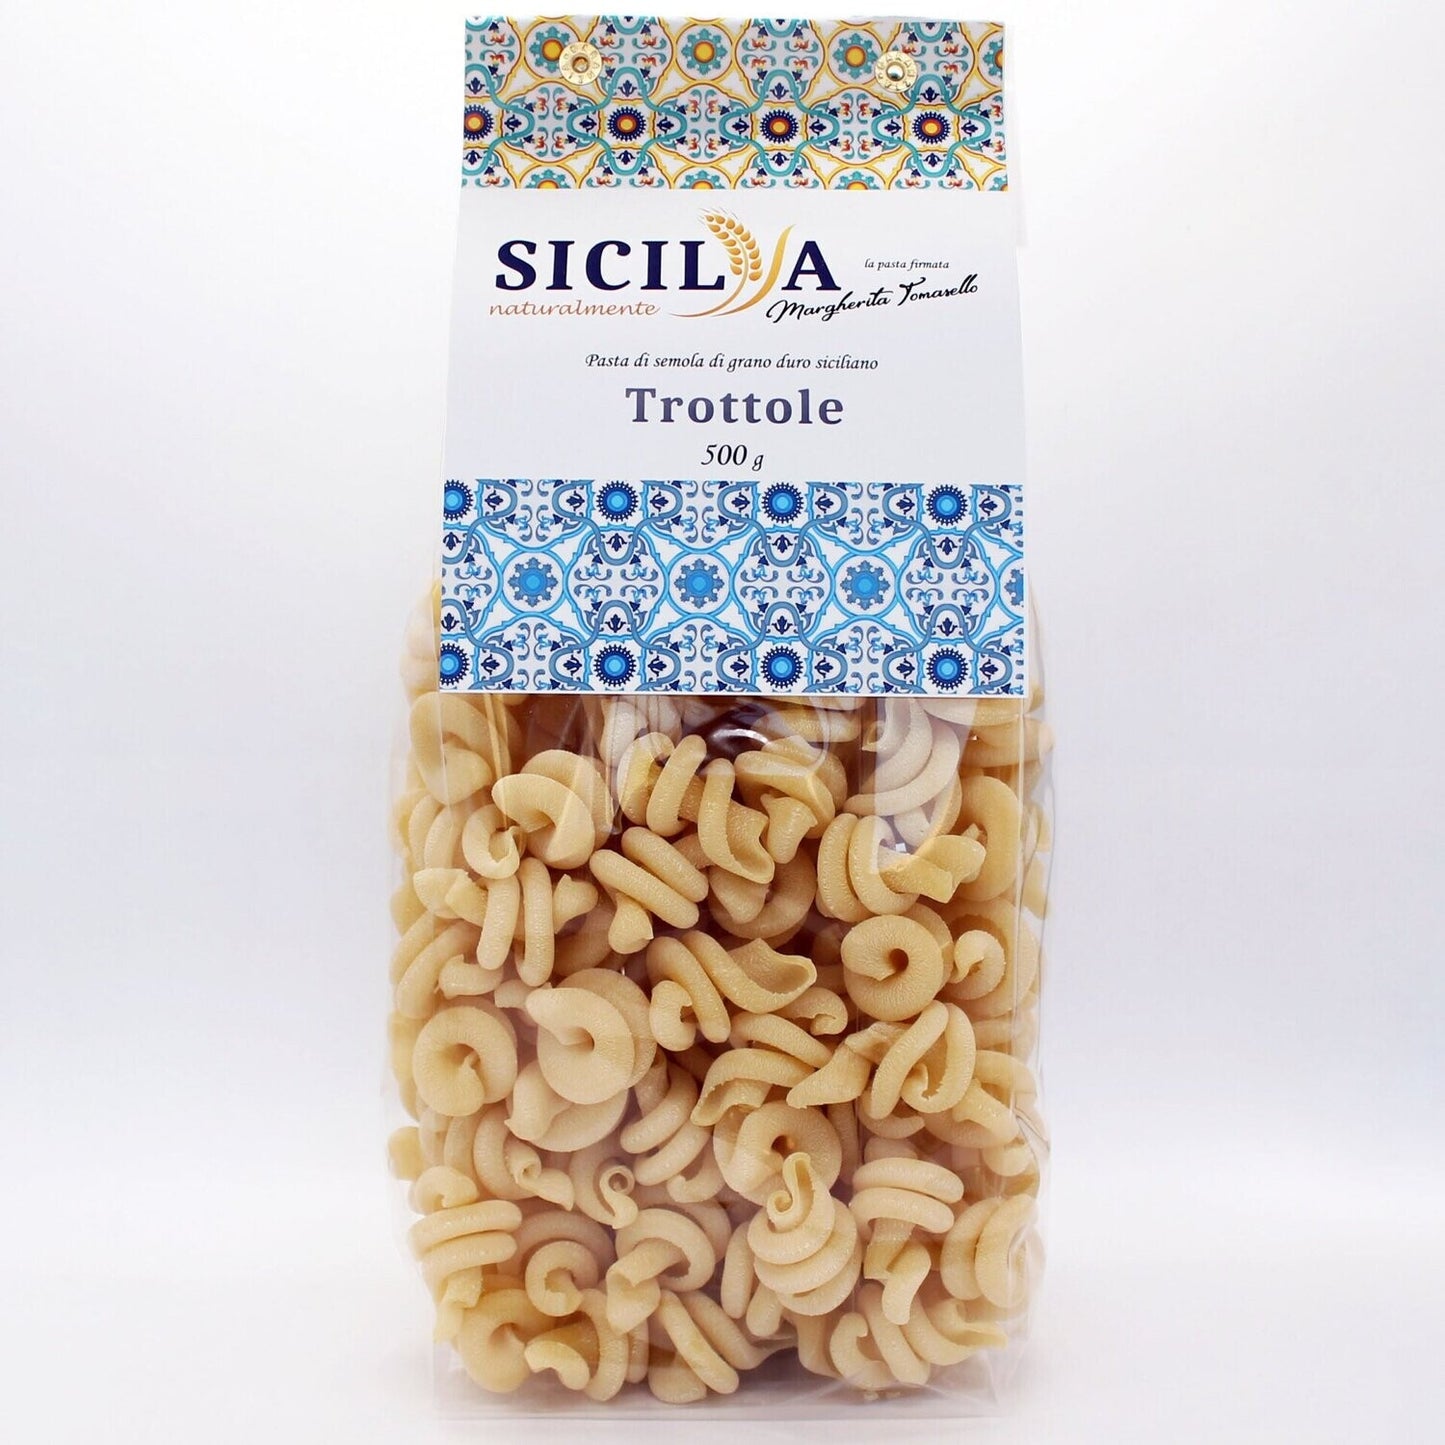 Sicilian Durum Wheat Trottole Pasta - Naturally Sicily